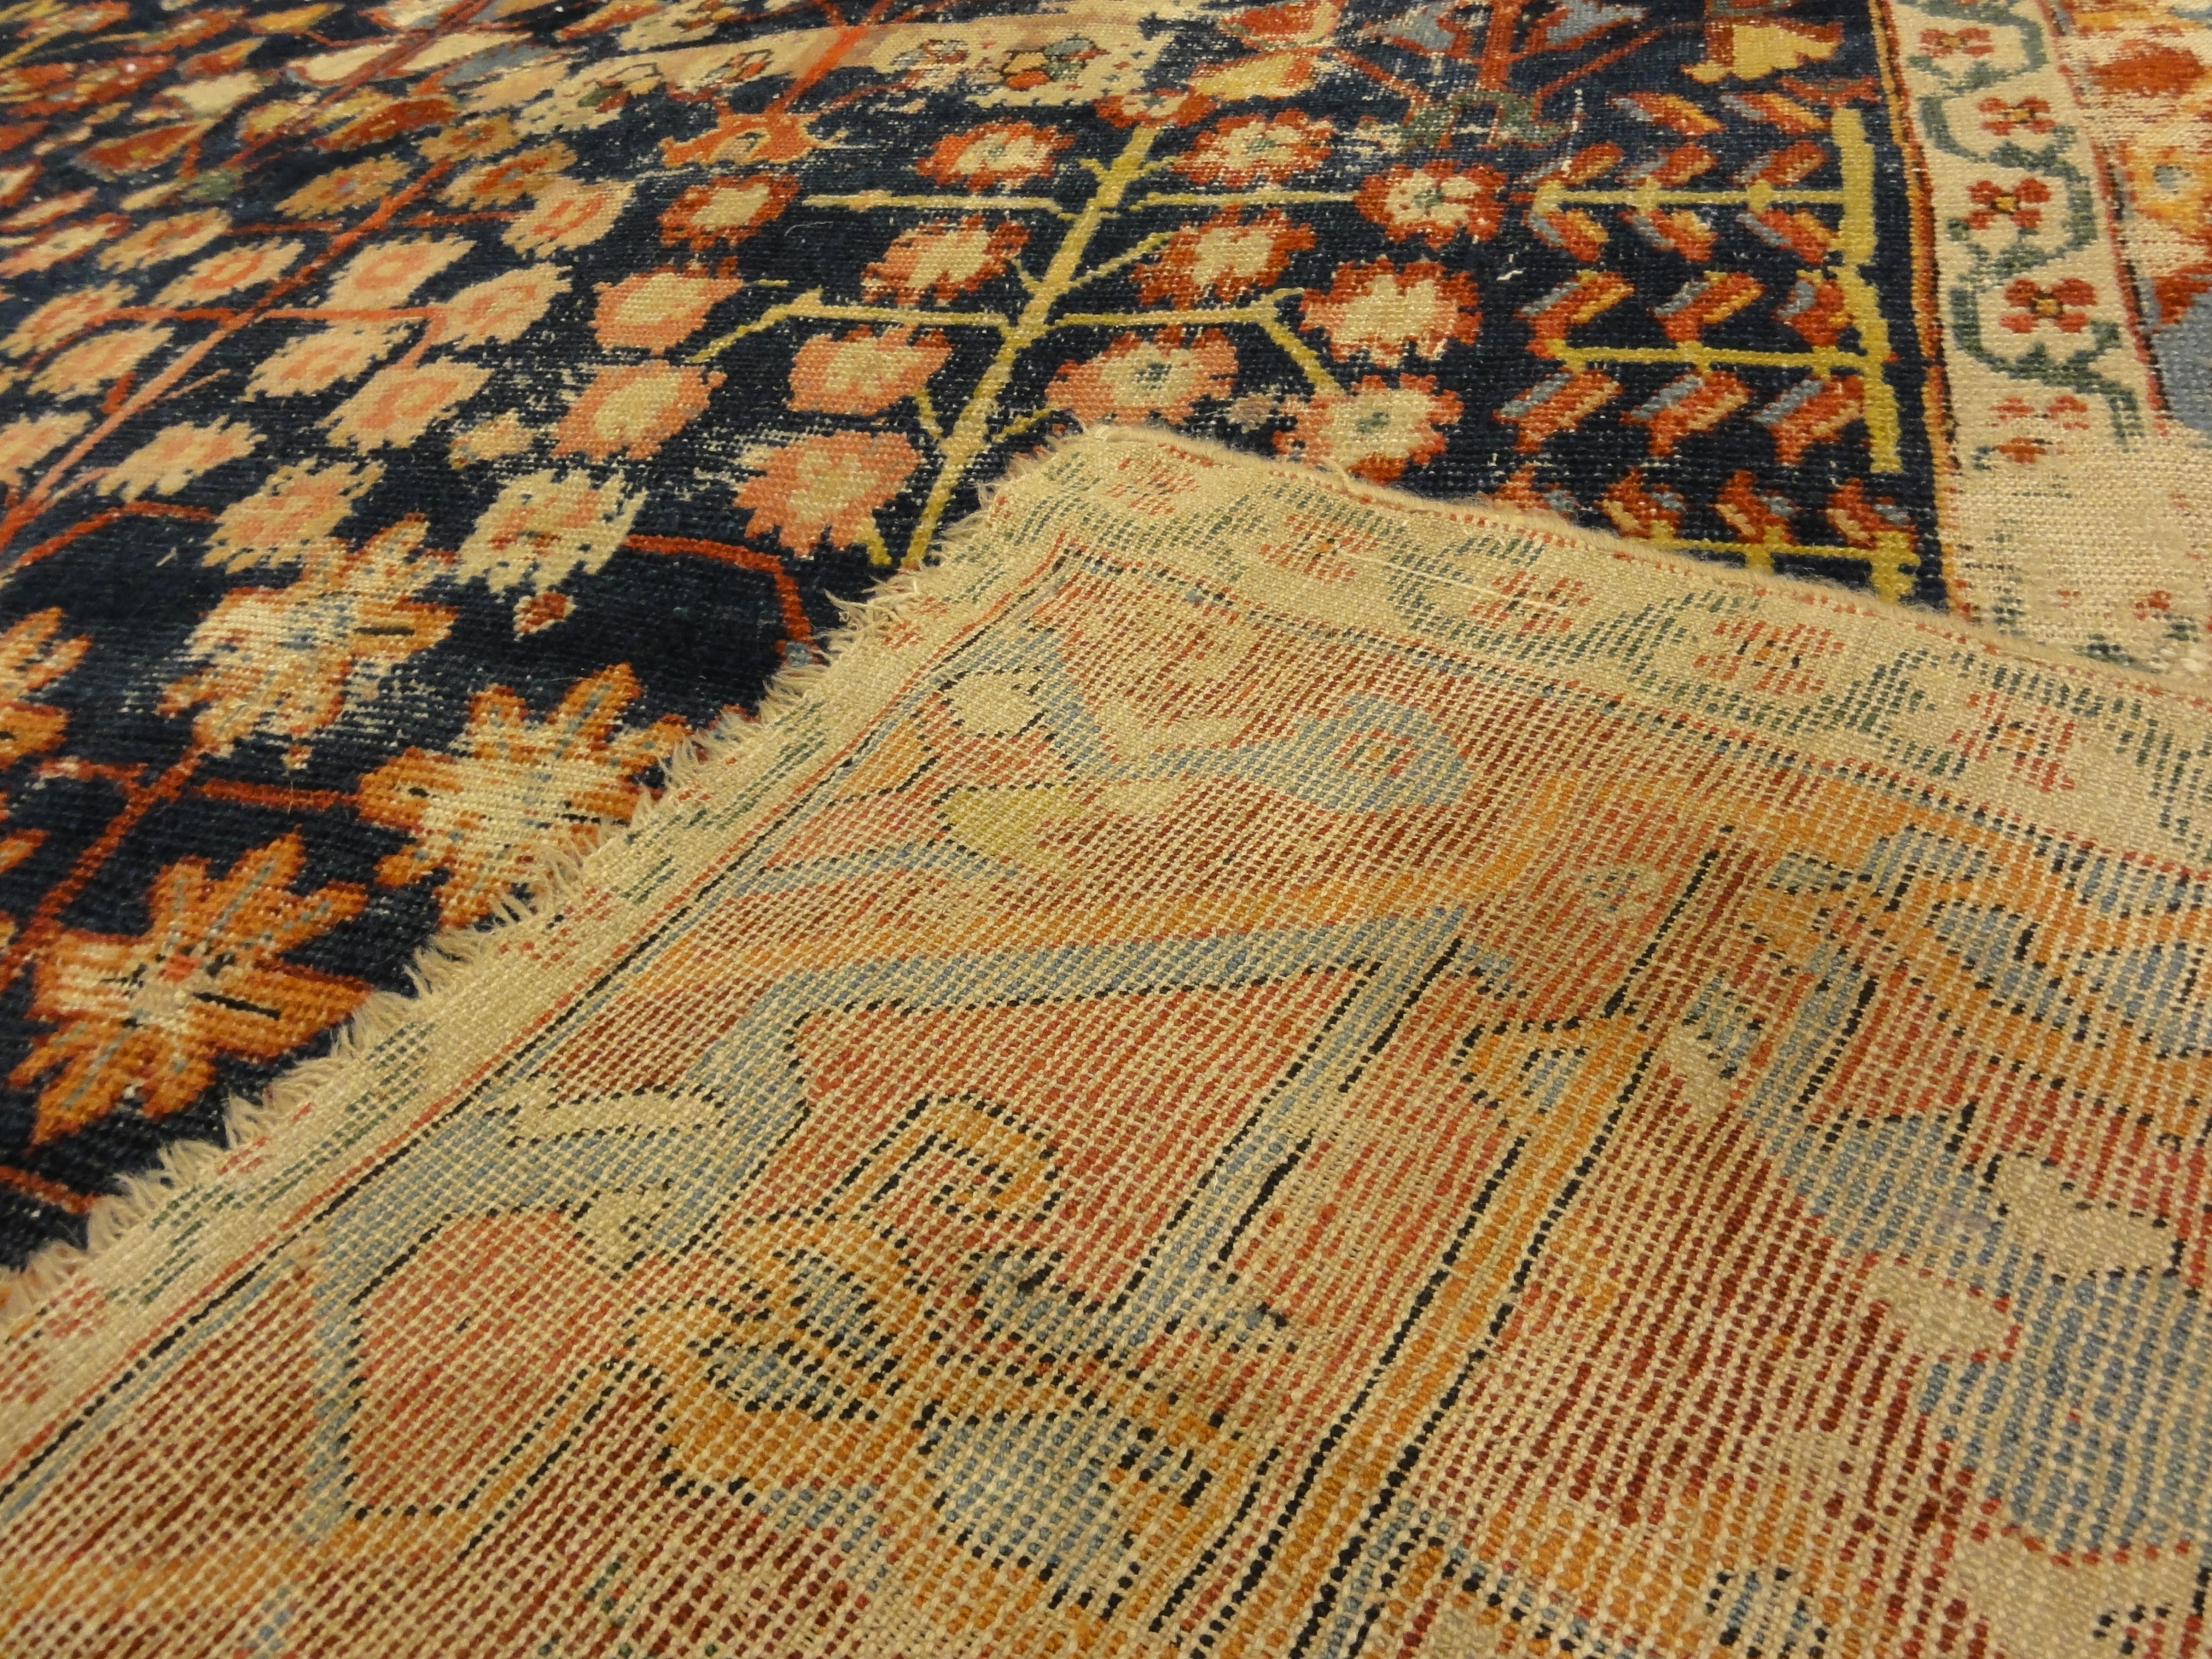 Antique Kurdish Shrub Rug Circa 17th Century A piece of genuine authentic woven carpet art sold by Santa Barbara Design Center Rugs and More.